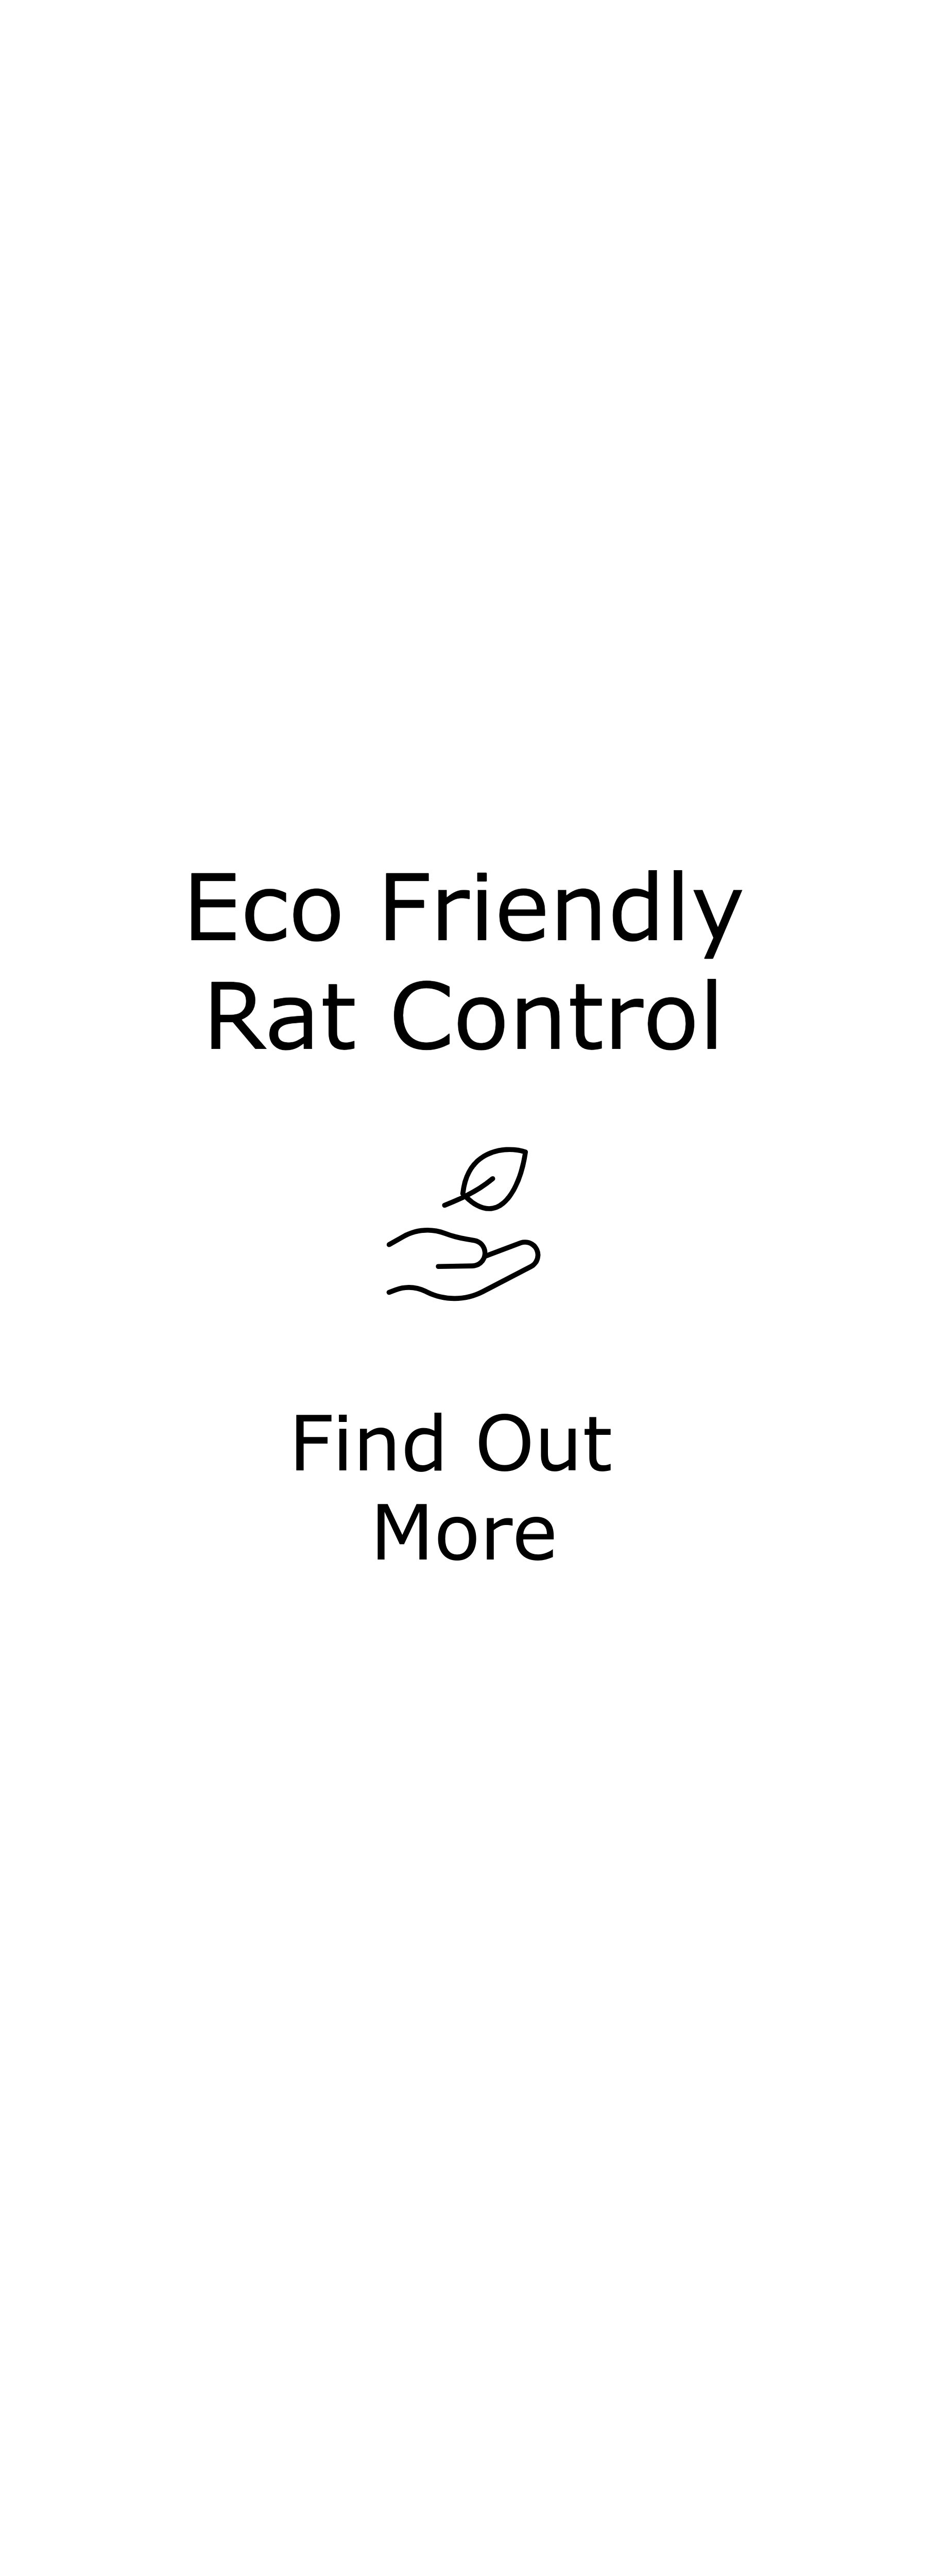 Eco Friendly Rat Control-logo-black (edited-Pixlr).jpg